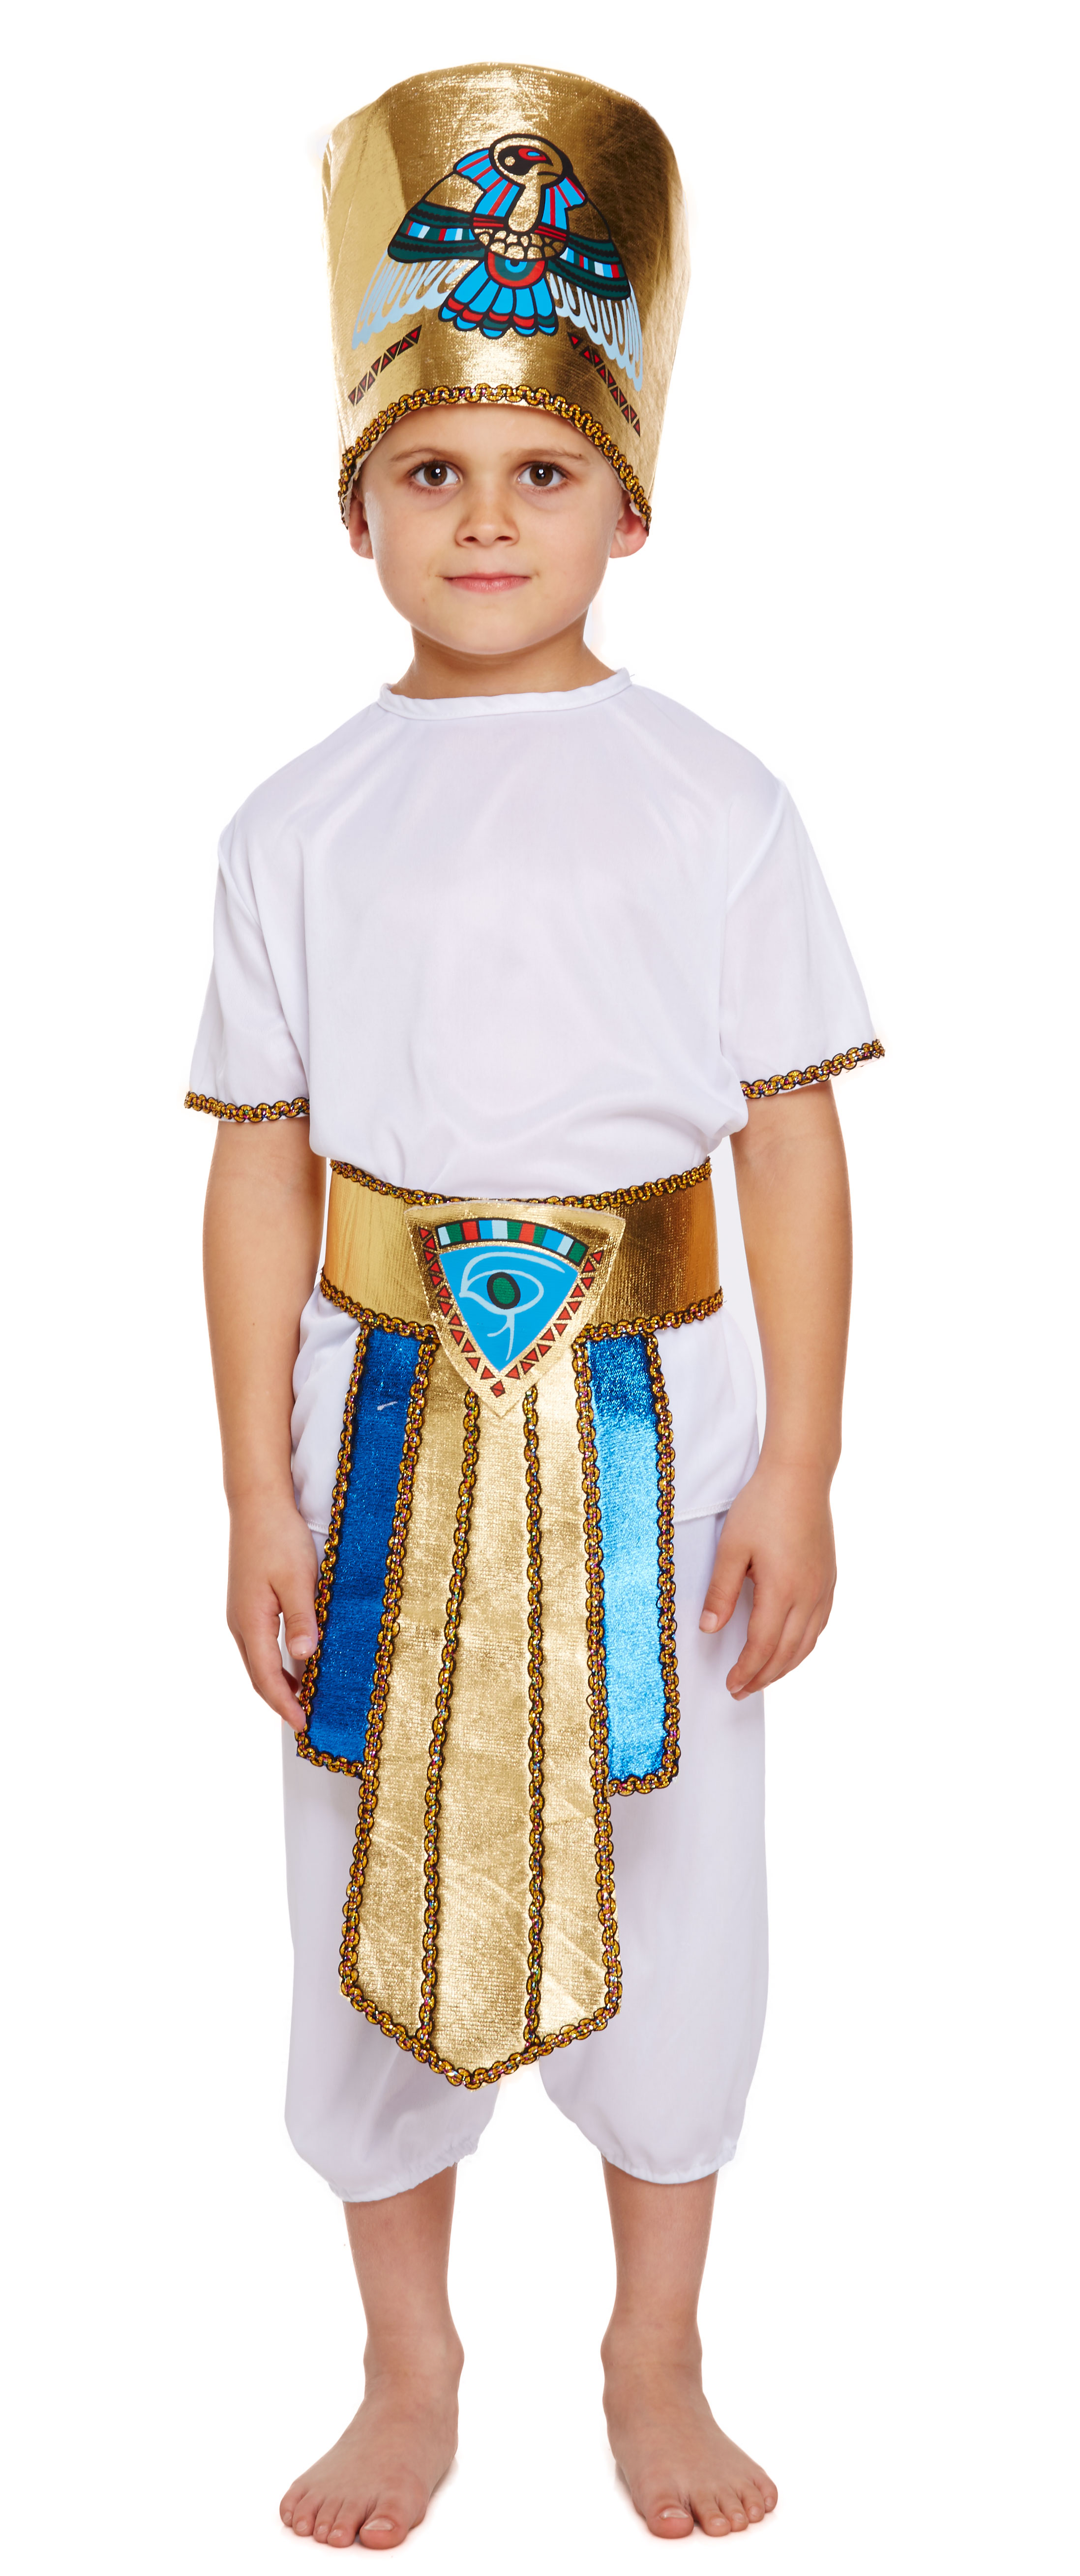 Dress Up Child Egyptian Boy Costume